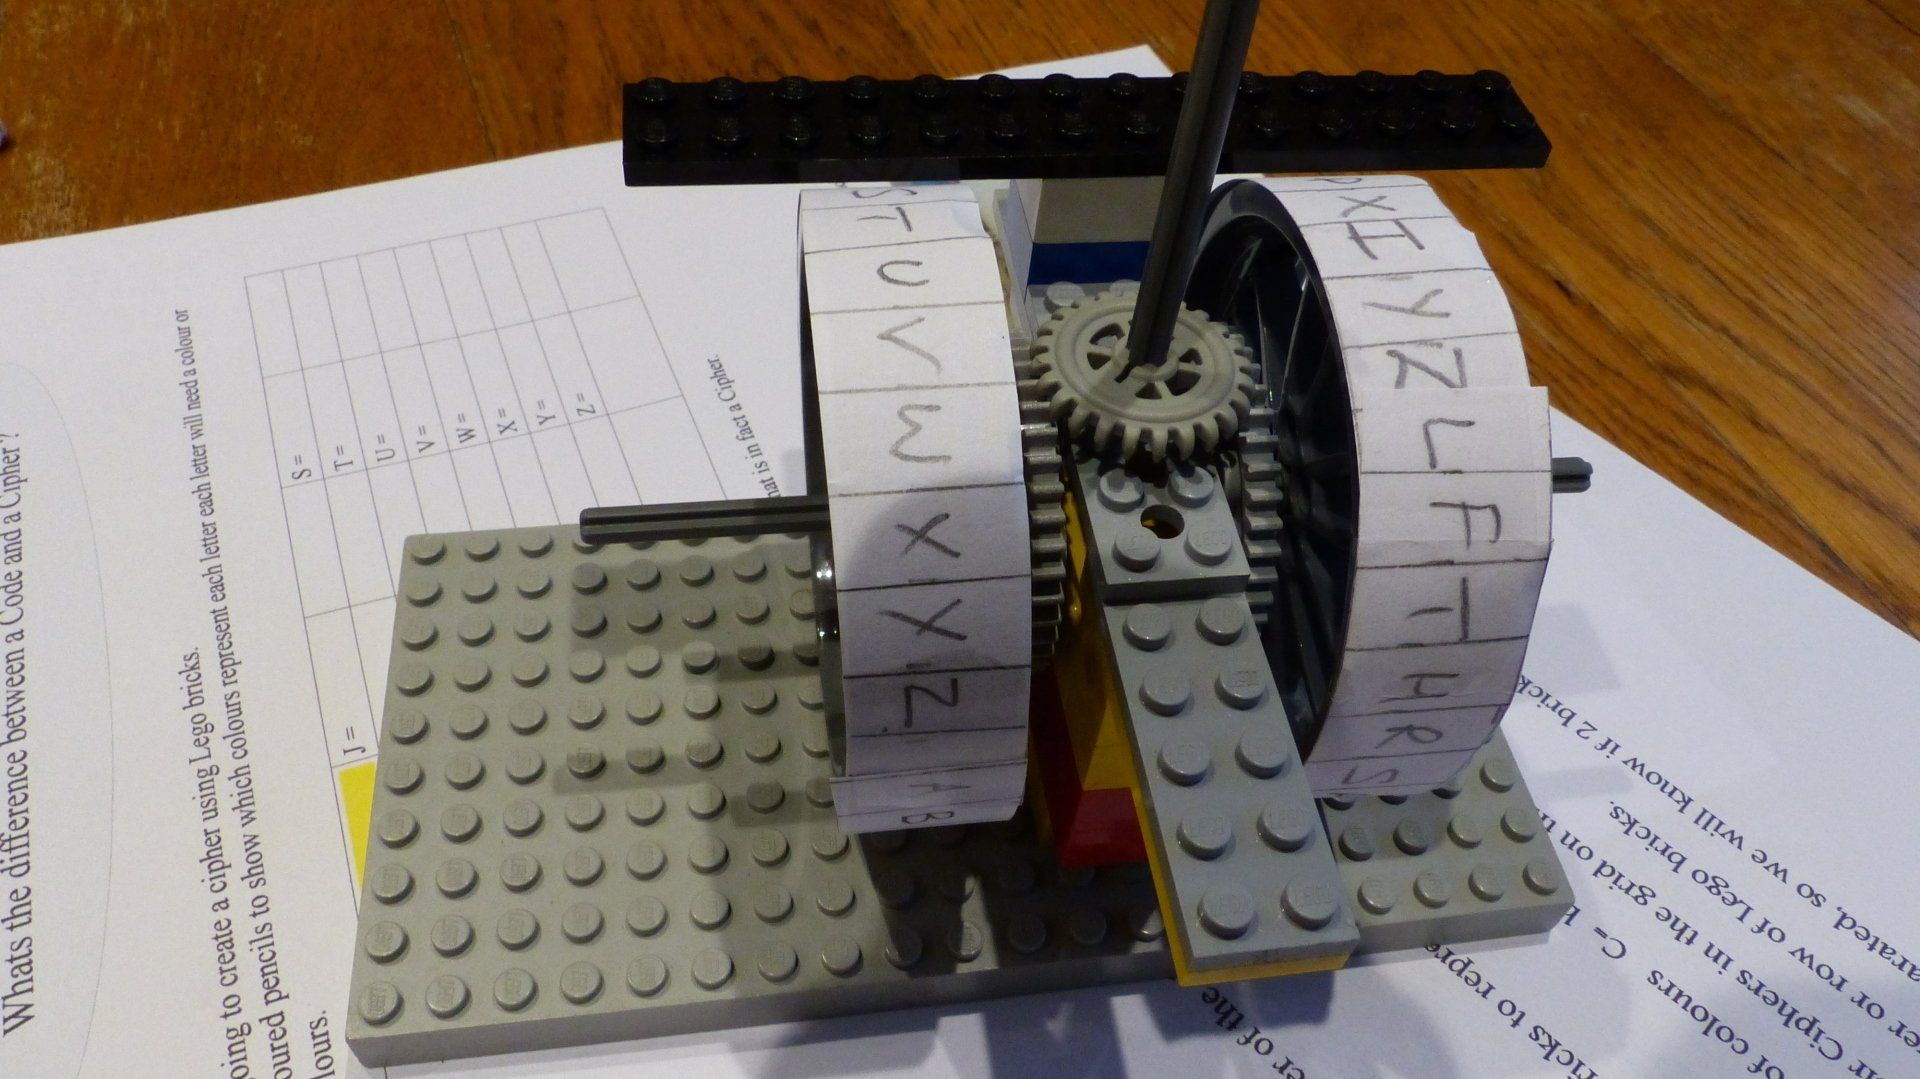 Lego Enigma machine